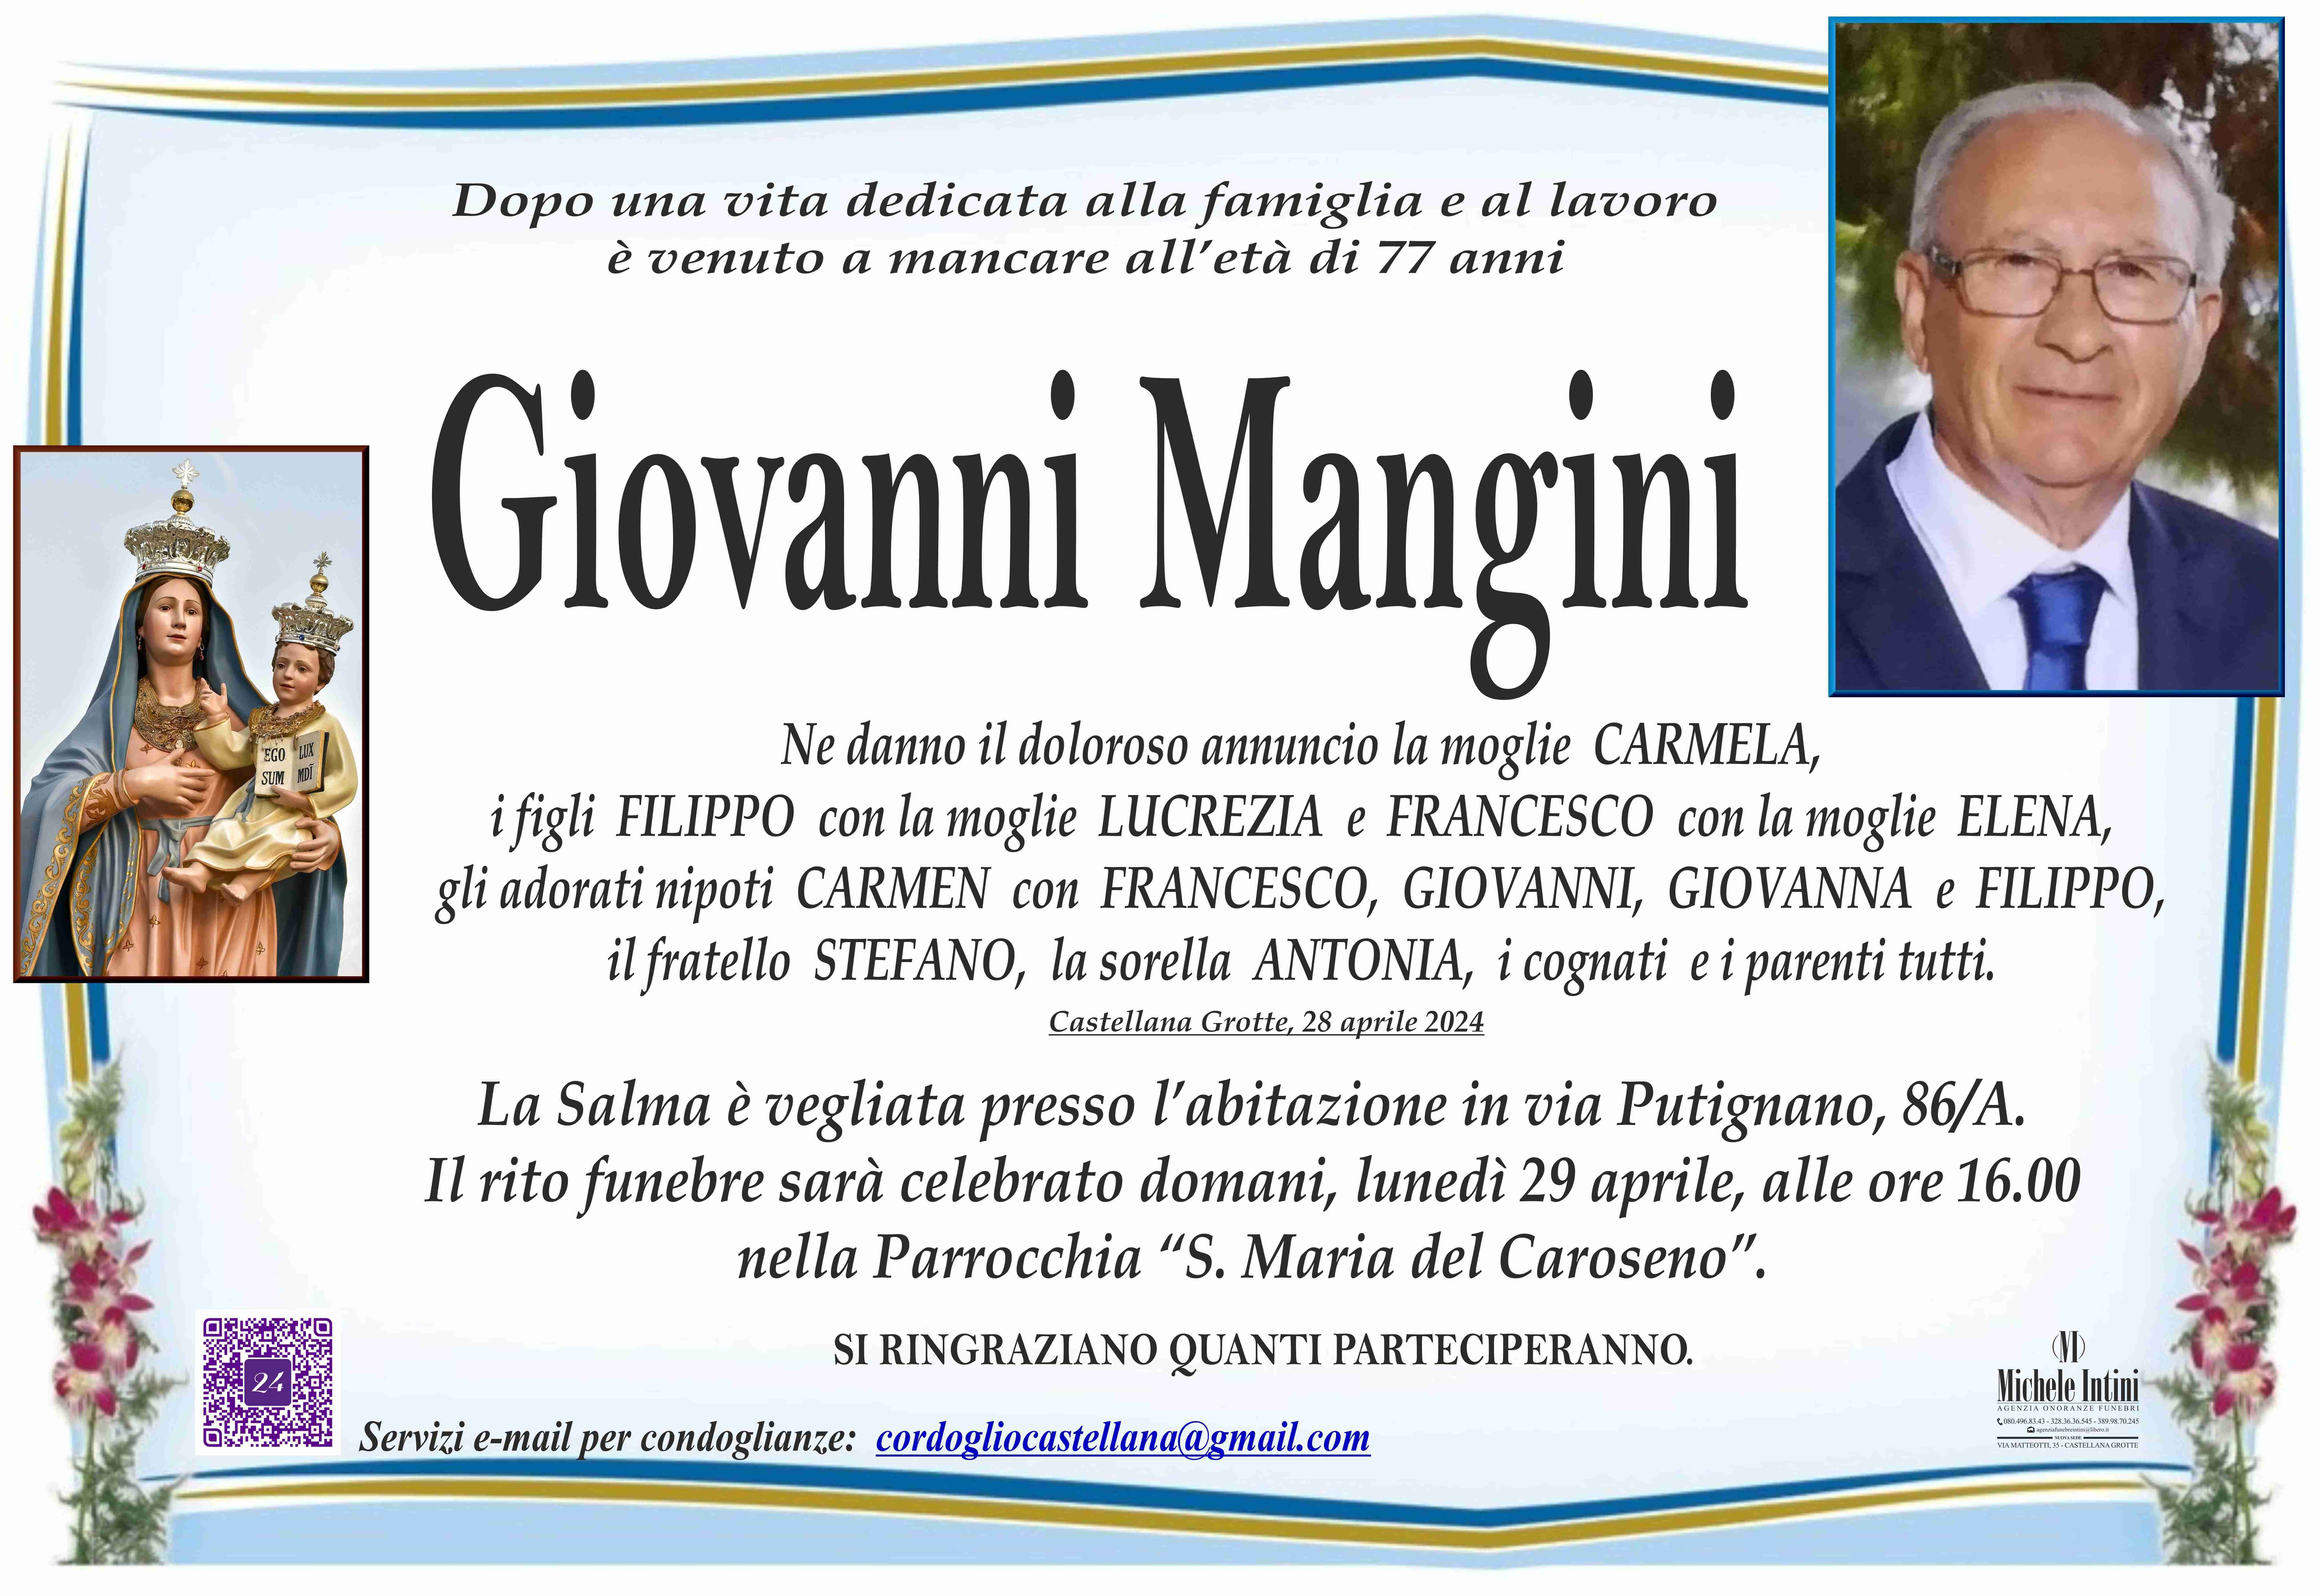 Giovanni Mangini